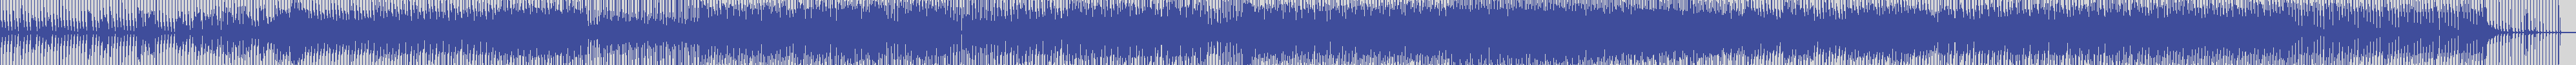 atomic_recordings [AR018] Gianluca Corsi - Low Emotion [Original Mix] audio wave form